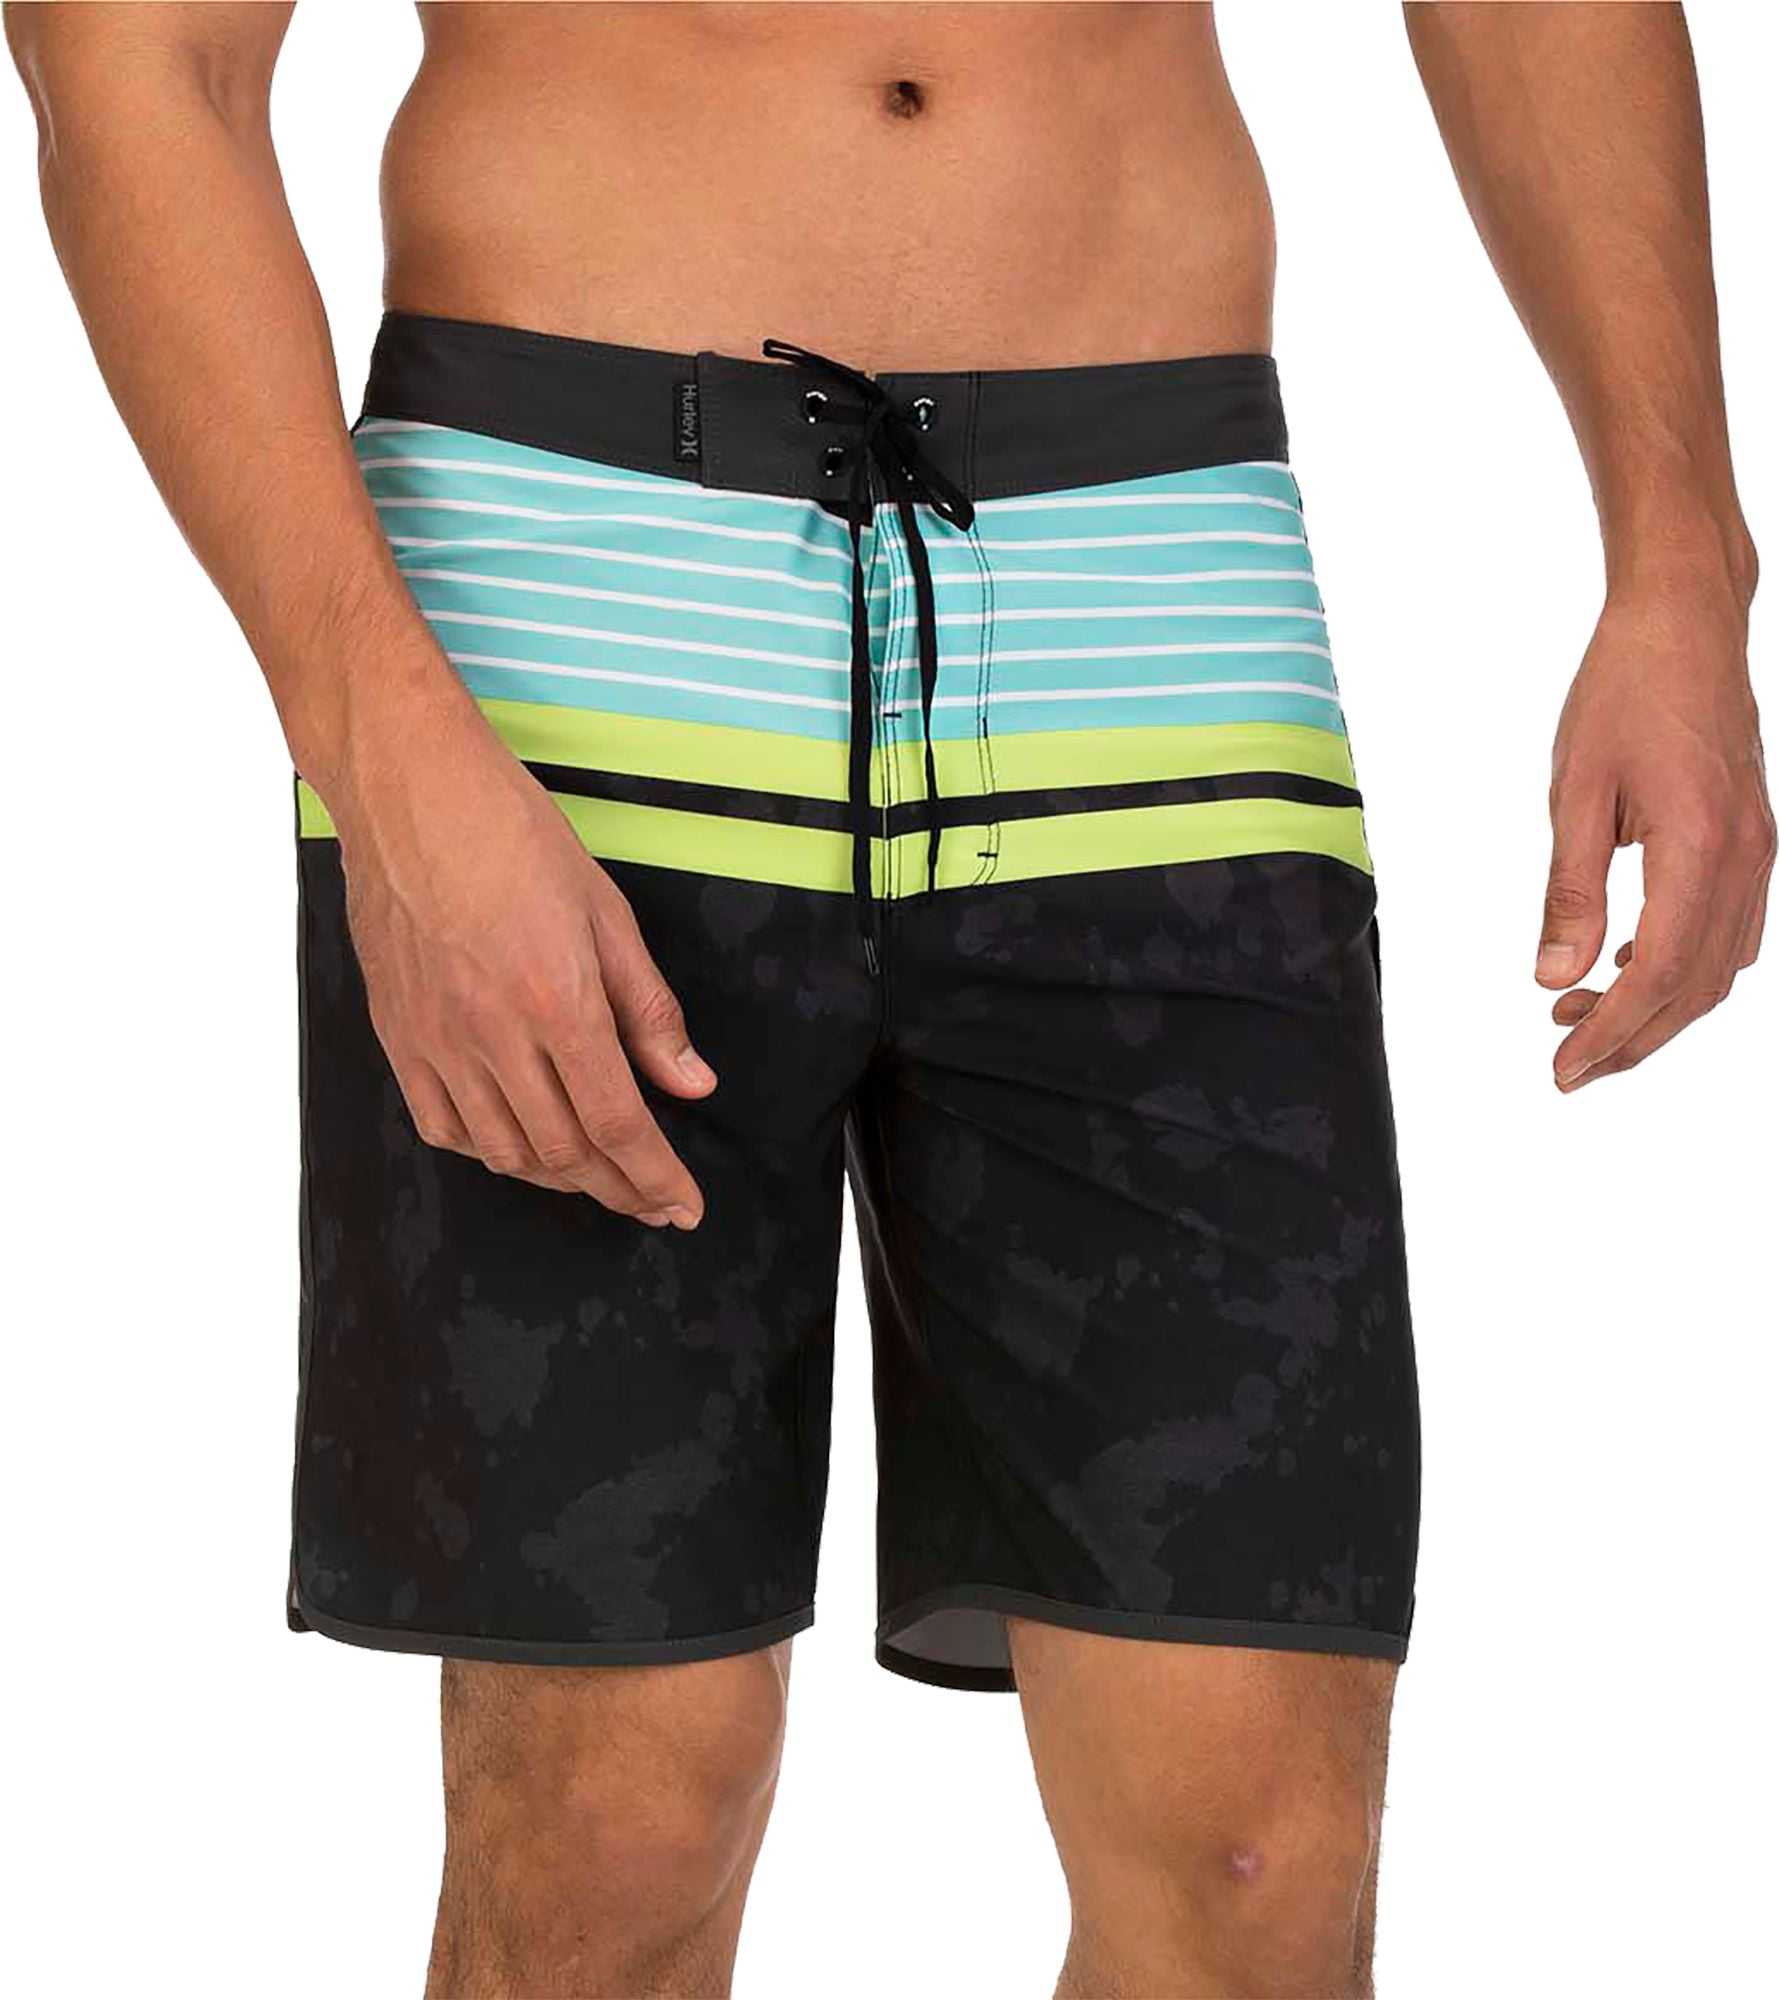 Hurley - Hurley Men's Phantom Aloha Stripe Board Shorts - Walmart.com ...